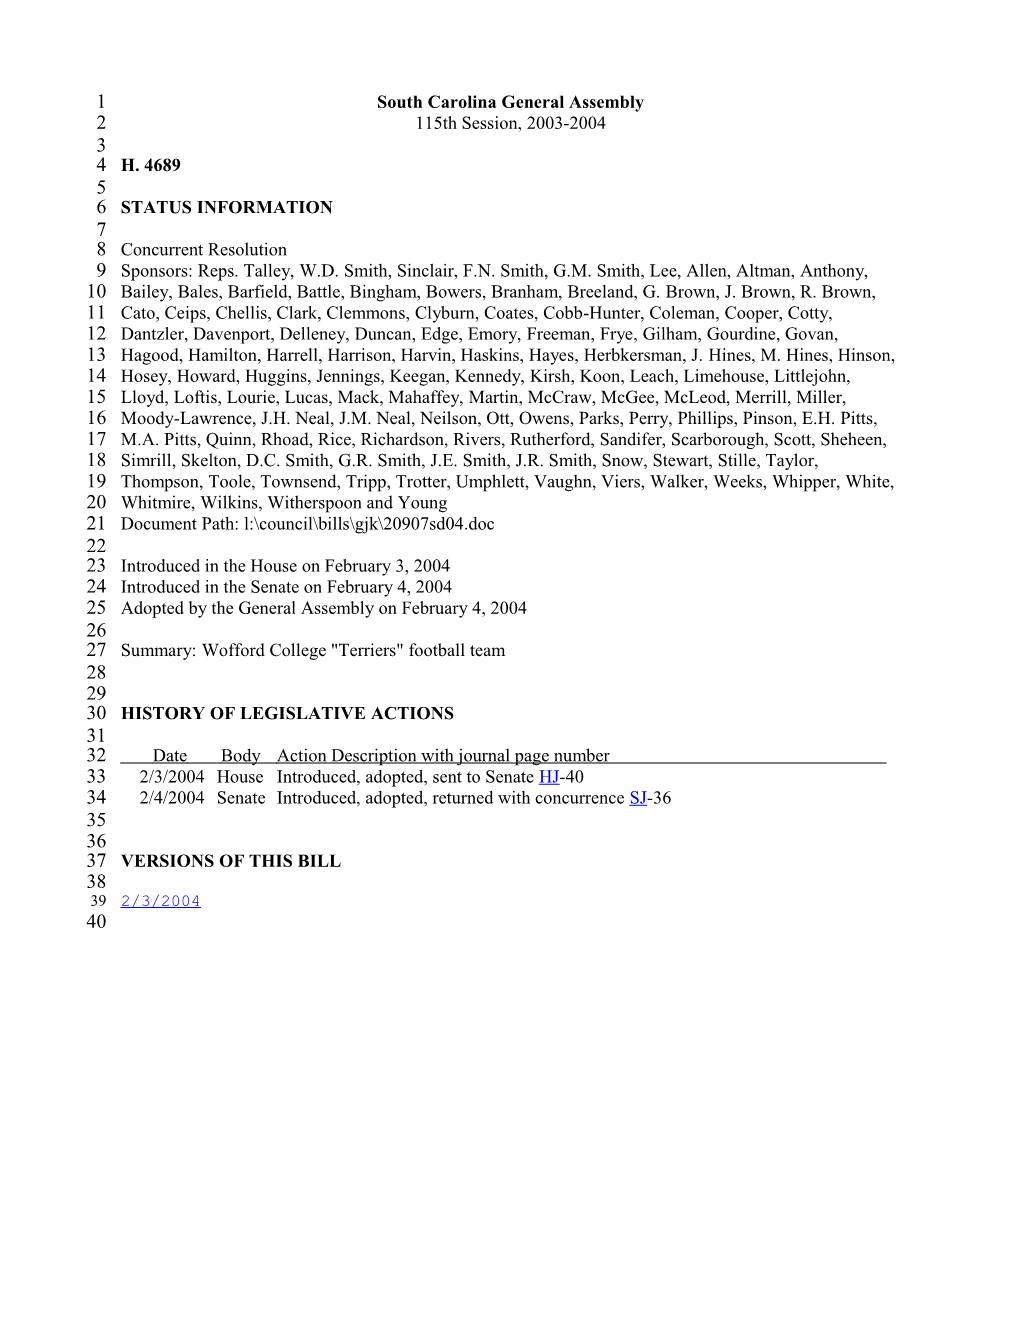 2003-2004 Bill 4689: Wofford College Terriers Football Team - South Carolina Legislature Online